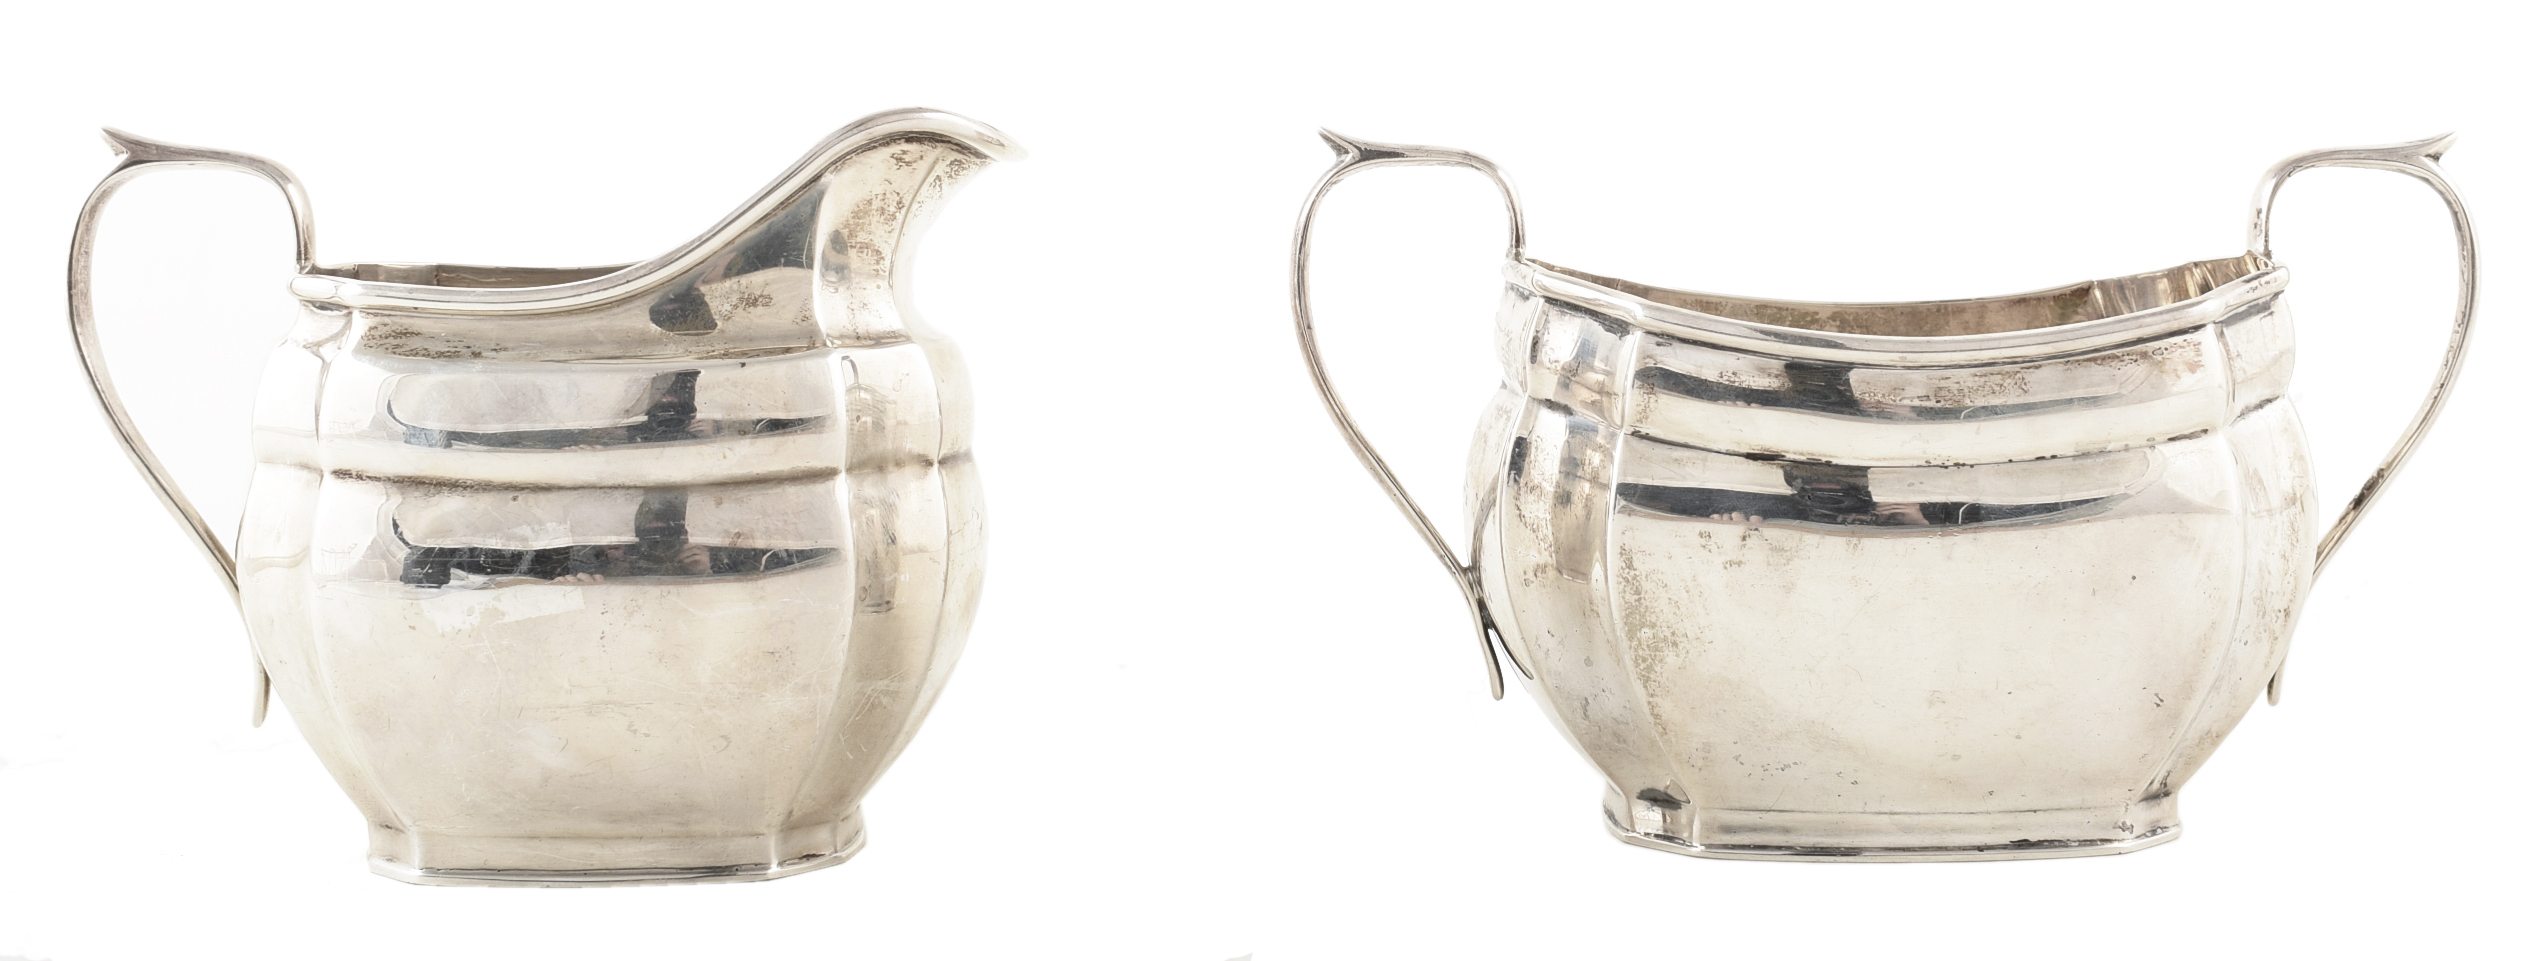 Three-piece silver tea set comprising teapot, milk jug and sugar bowl , rounded rectangular forms - Image 2 of 2